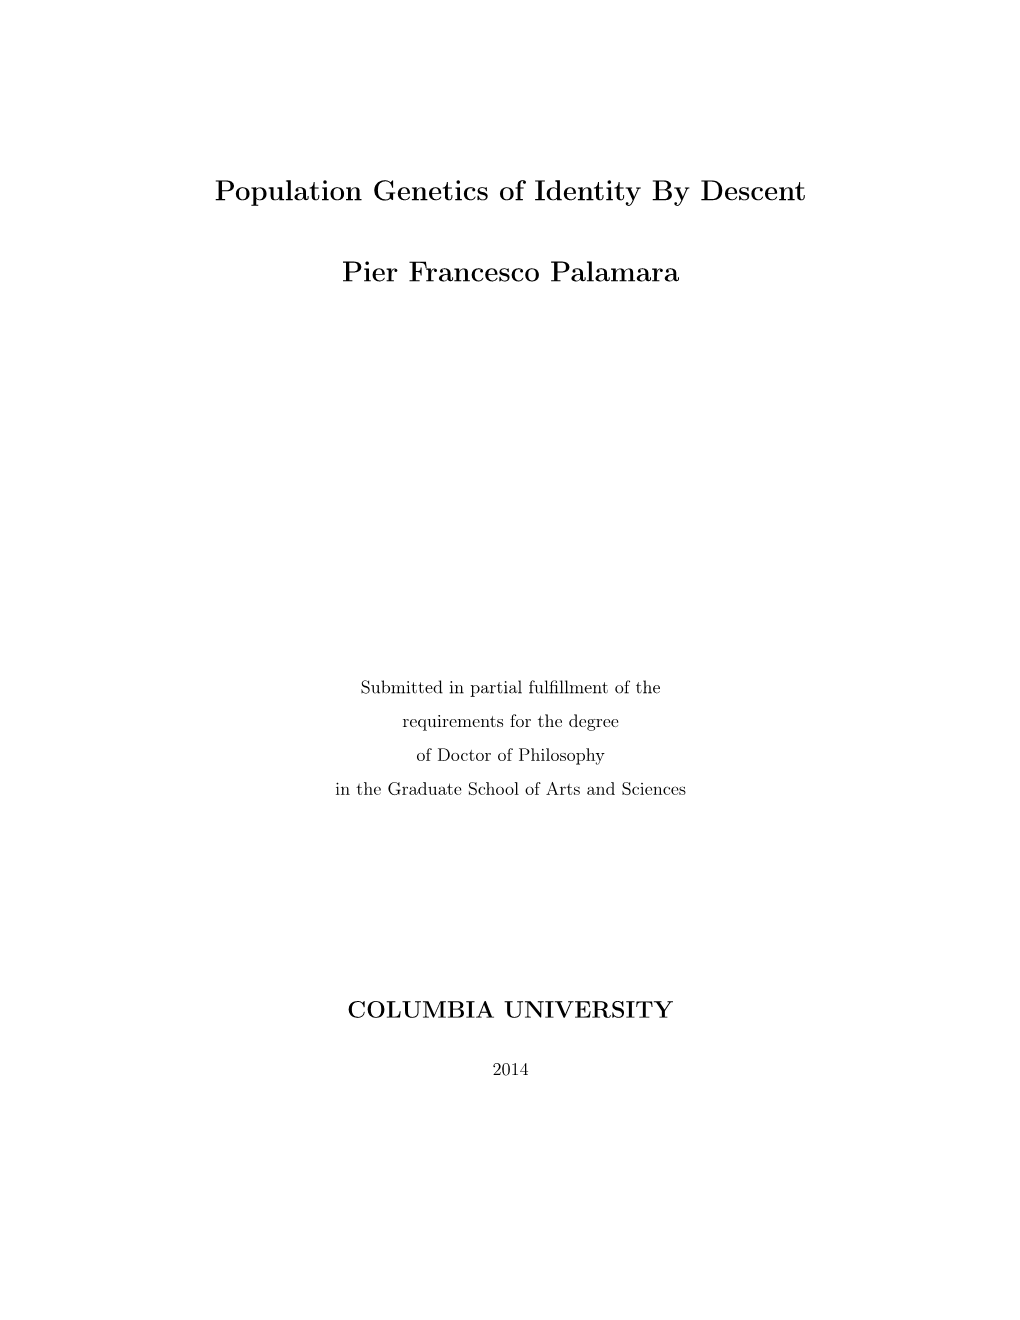 Population Genetics of Identity by Descent Pier Francesco Palamara